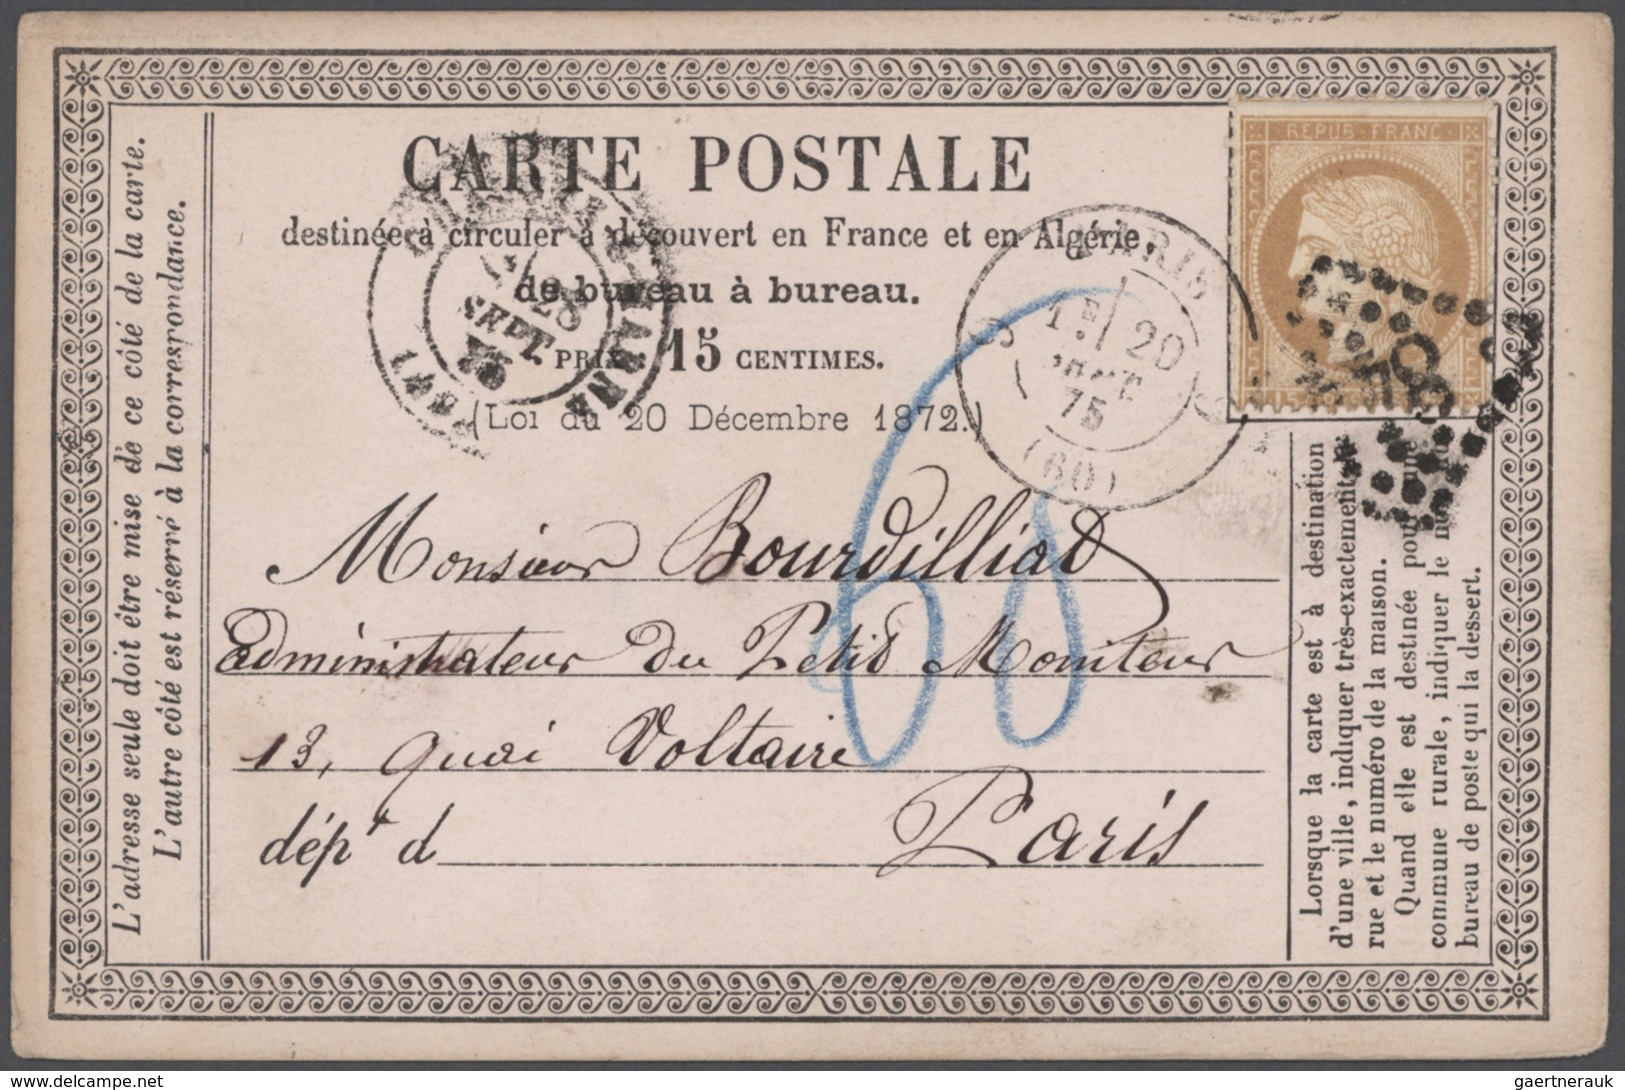 Frankreich - Ganzsachen: 1873/1943, assortment of apprx. 105 stationeries incl. 50 pieces "1873 type